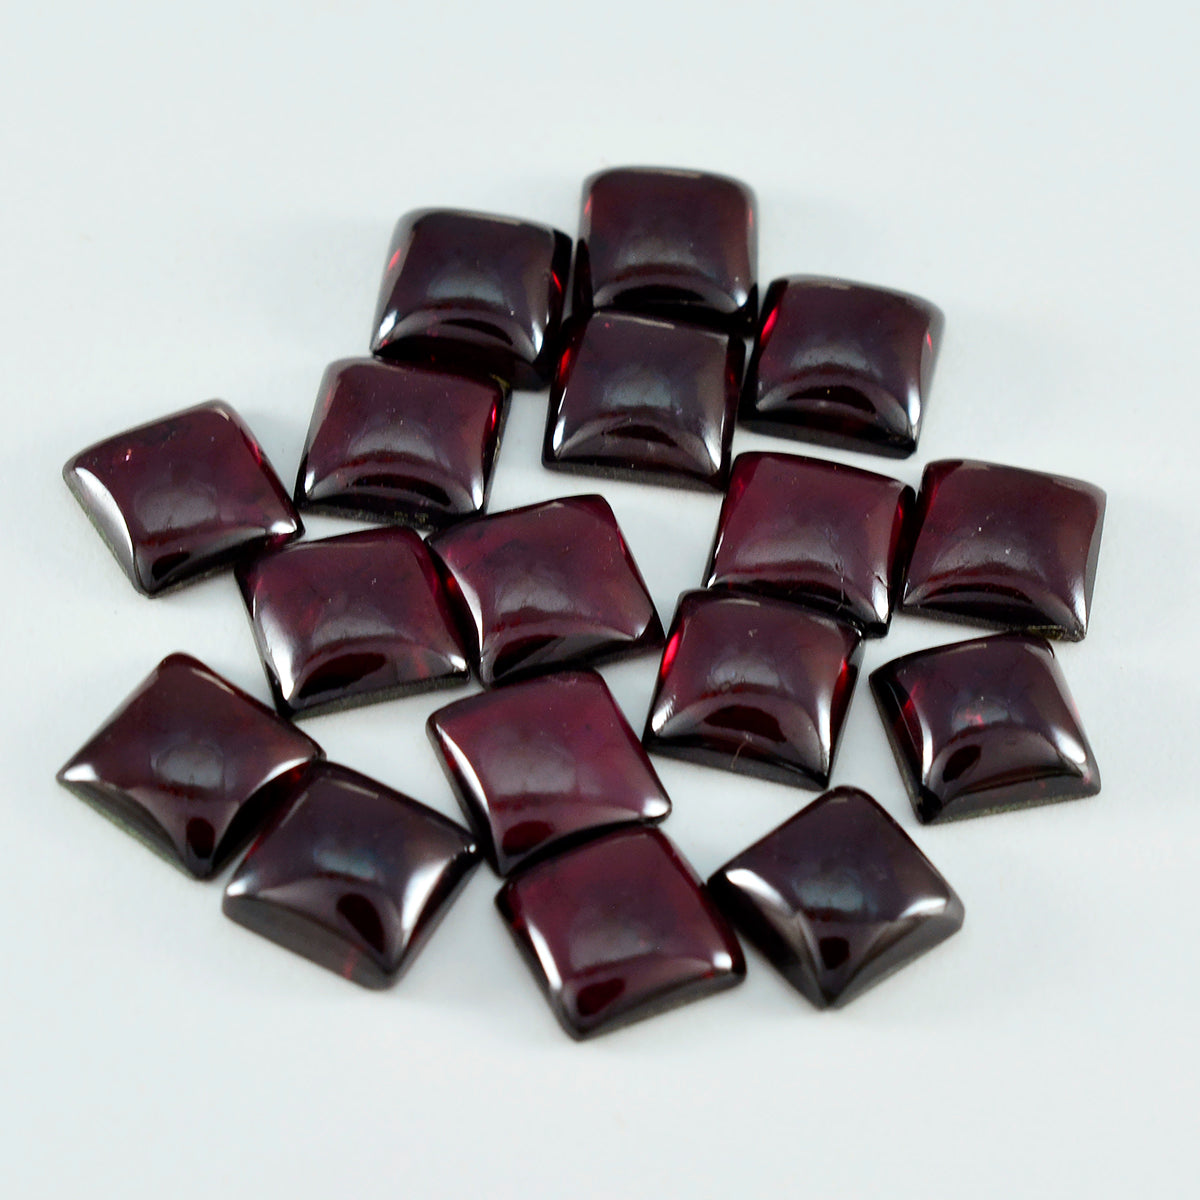 Riyogems 1PC Red Garnet Cabochon 8X8 mm Square Shape pretty Quality Loose Gemstone